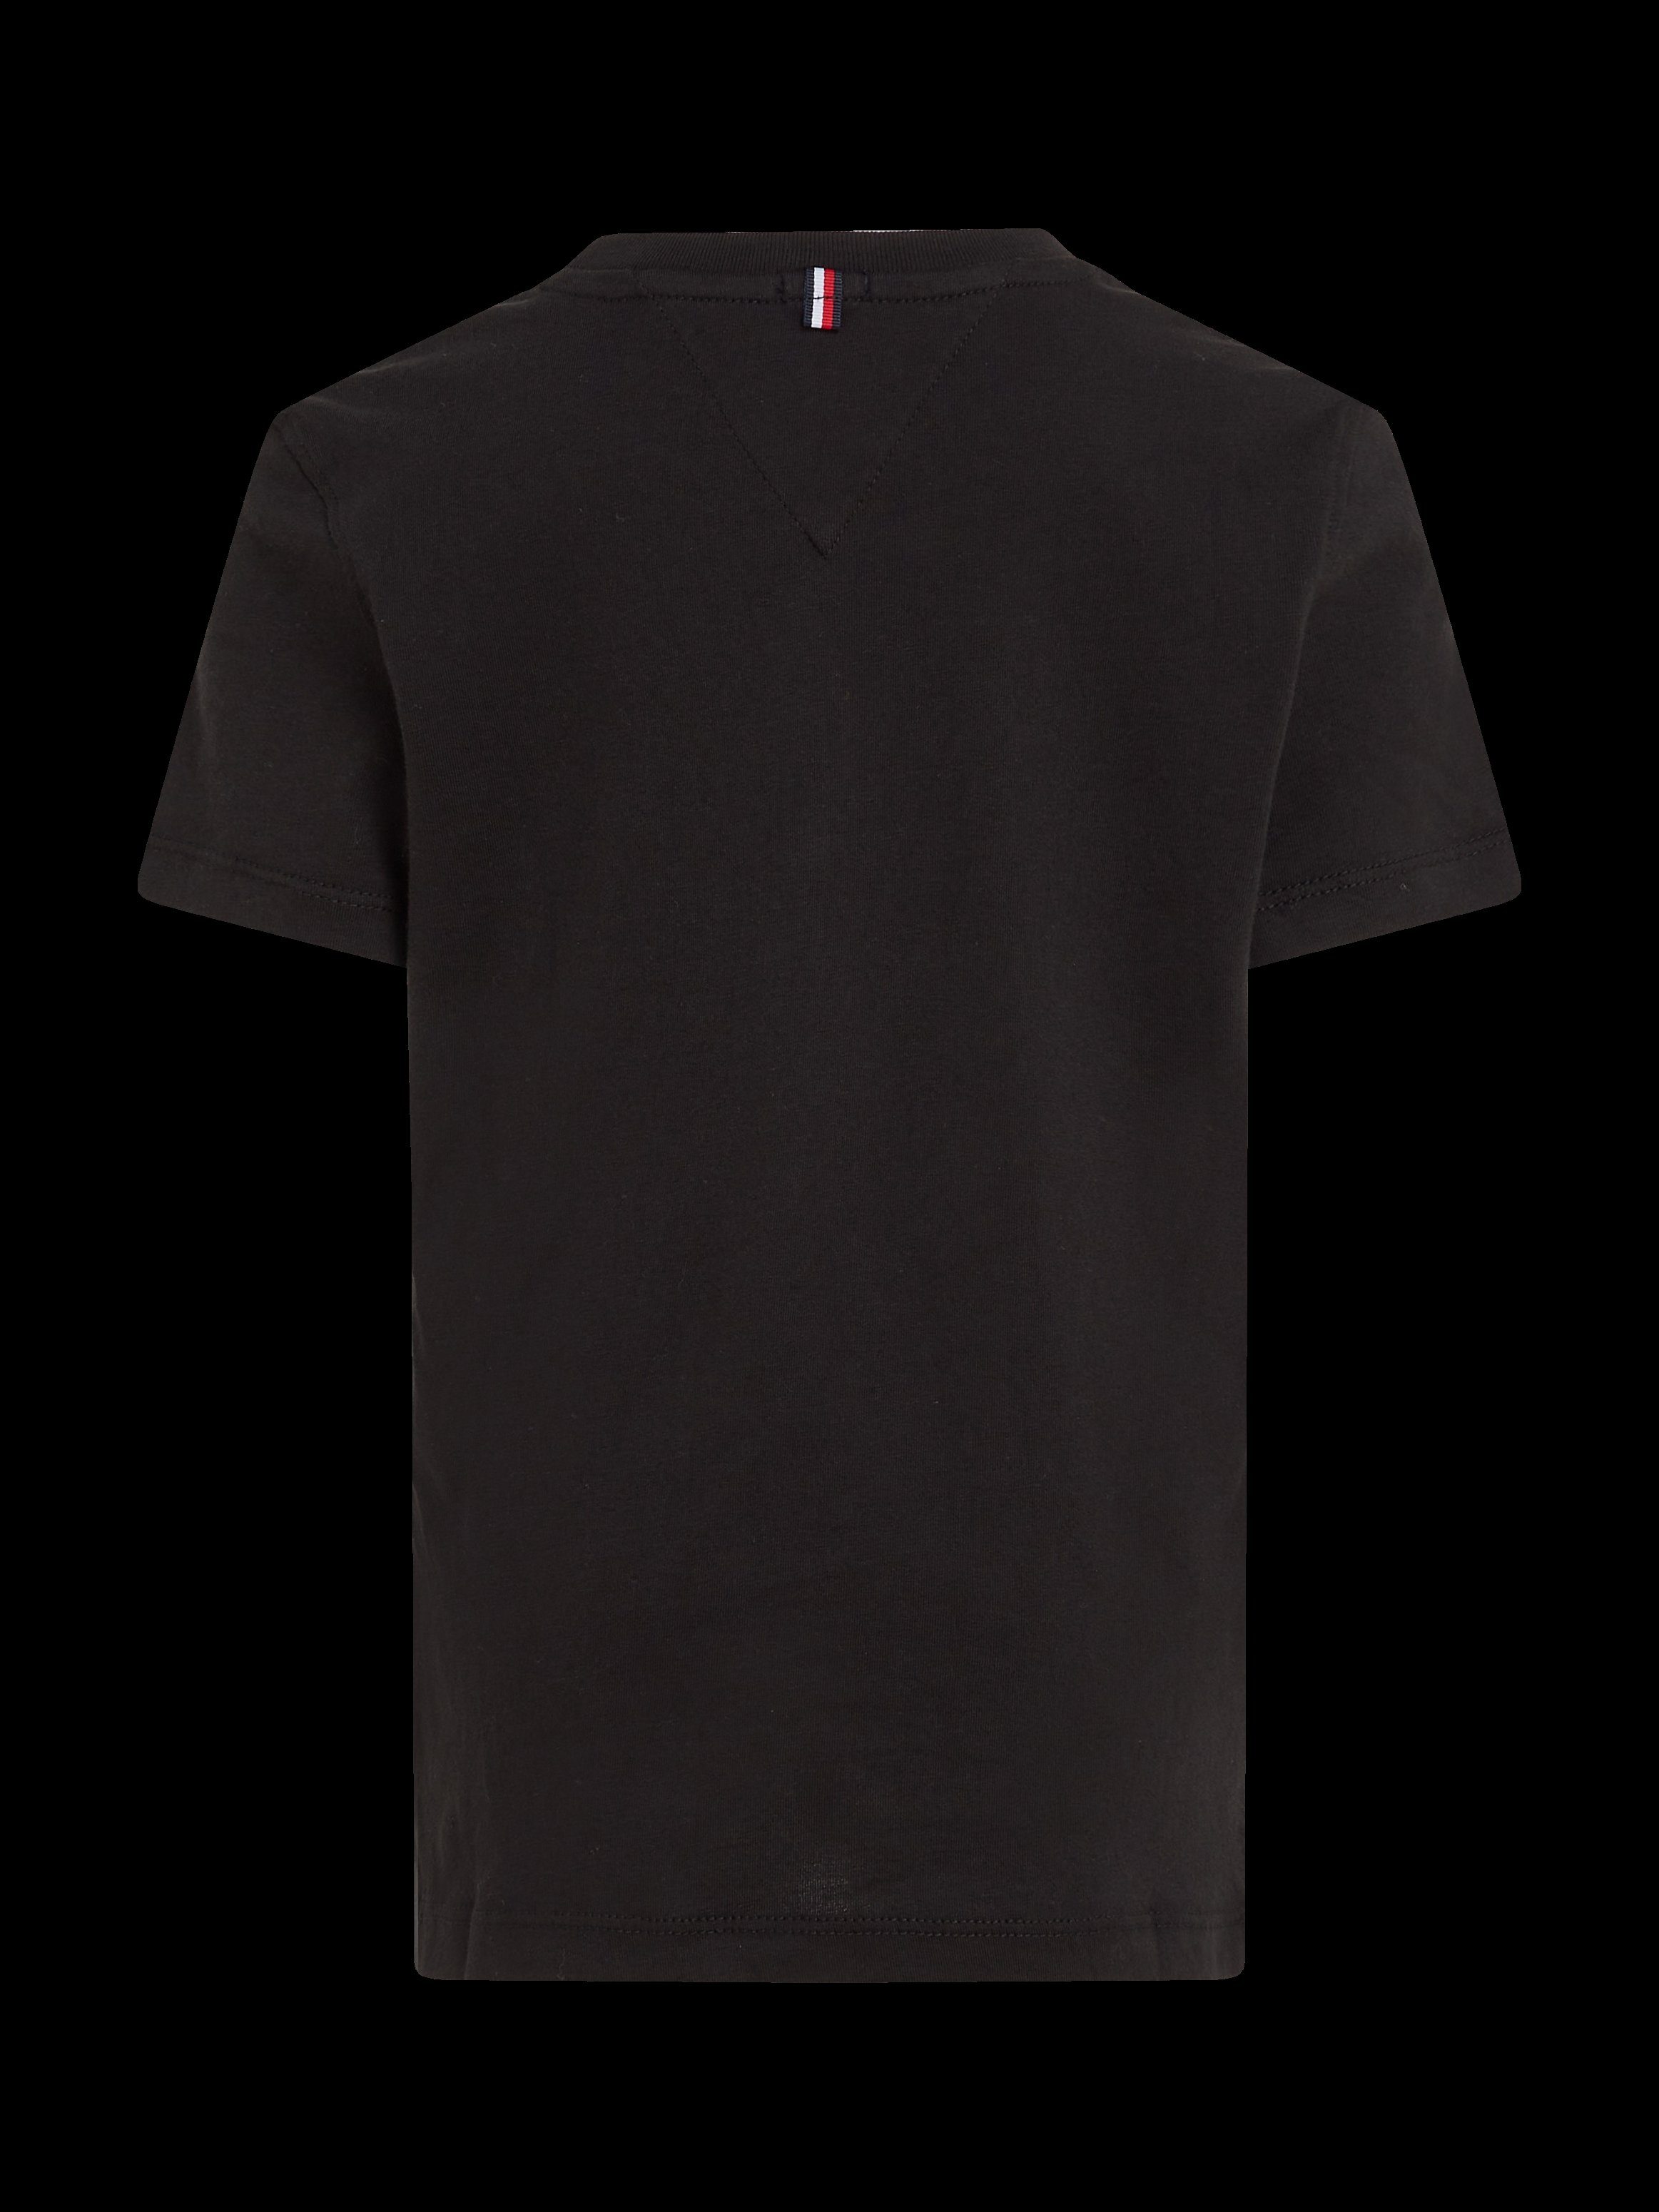 Tommy Hilfiger T-Shirt BOYS BASIC MiniMe,für Jungen Kids Kinder Junior CN KNIT